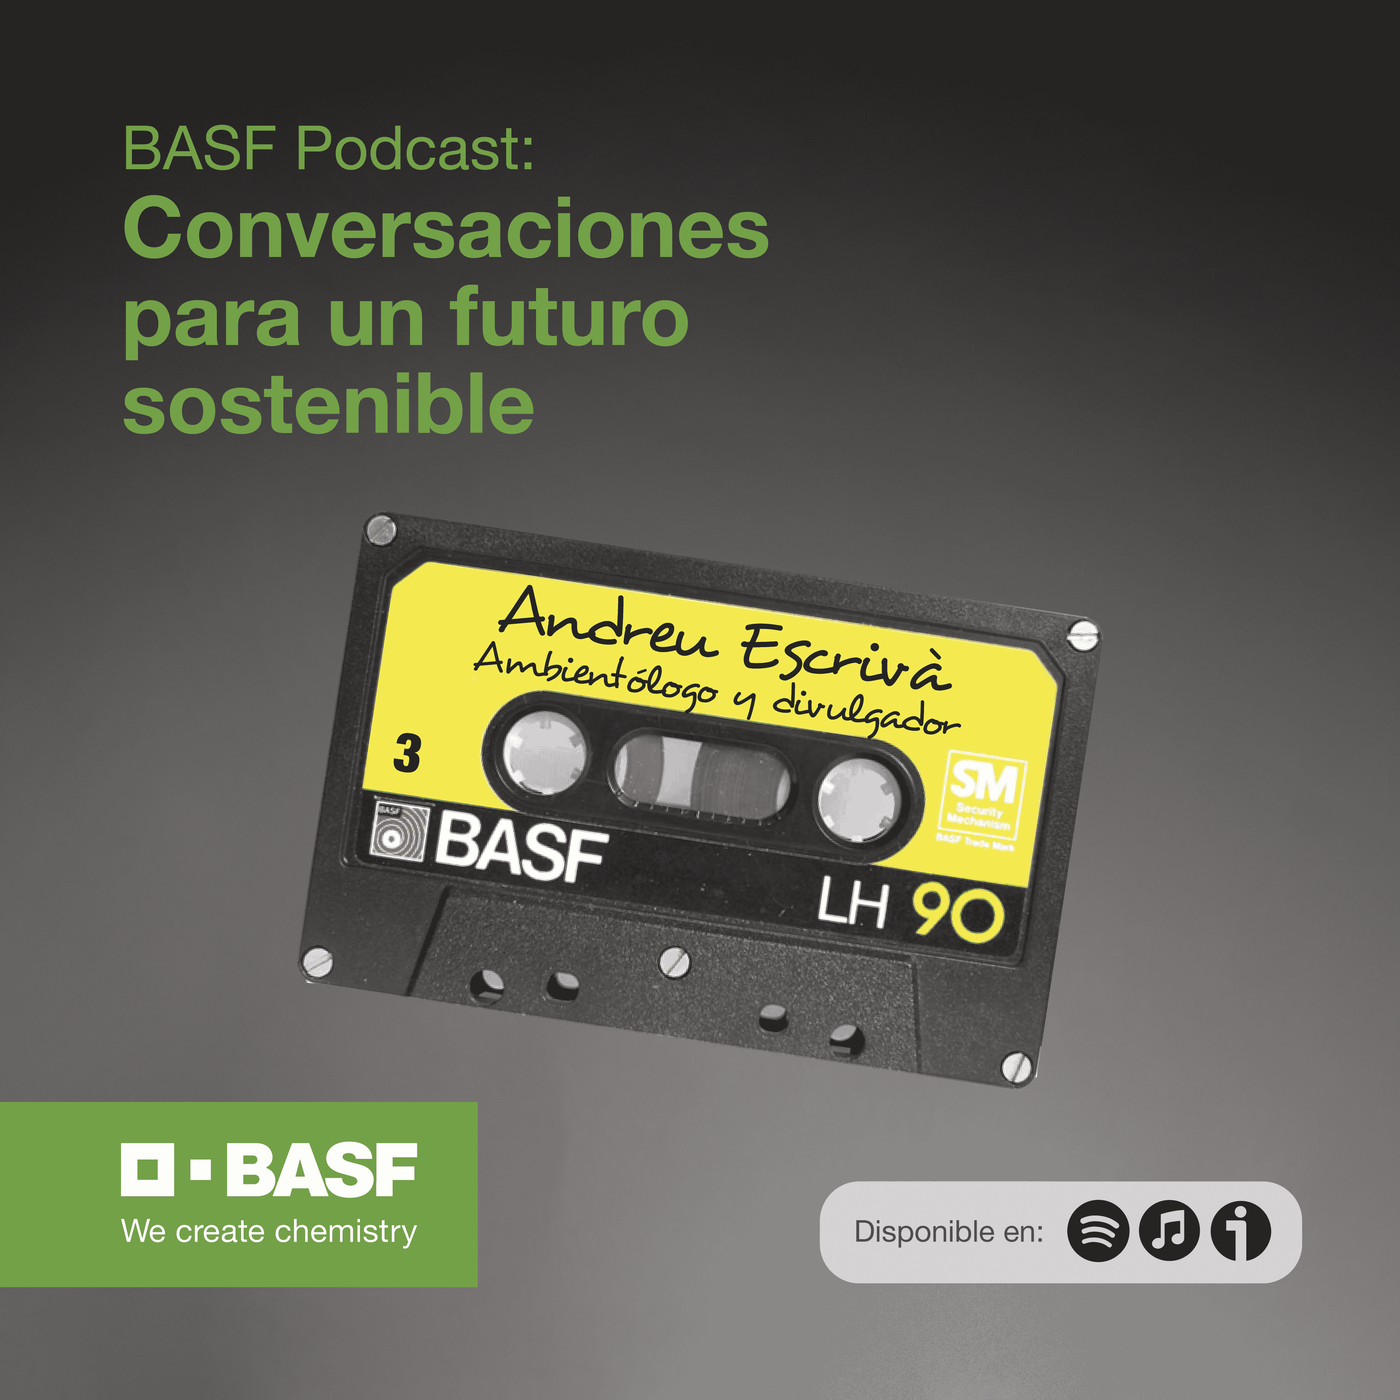 BASF Podcast, Conversaciones para un futuro sostenible: Andreu Escrivà, ambientólogo y divulgador